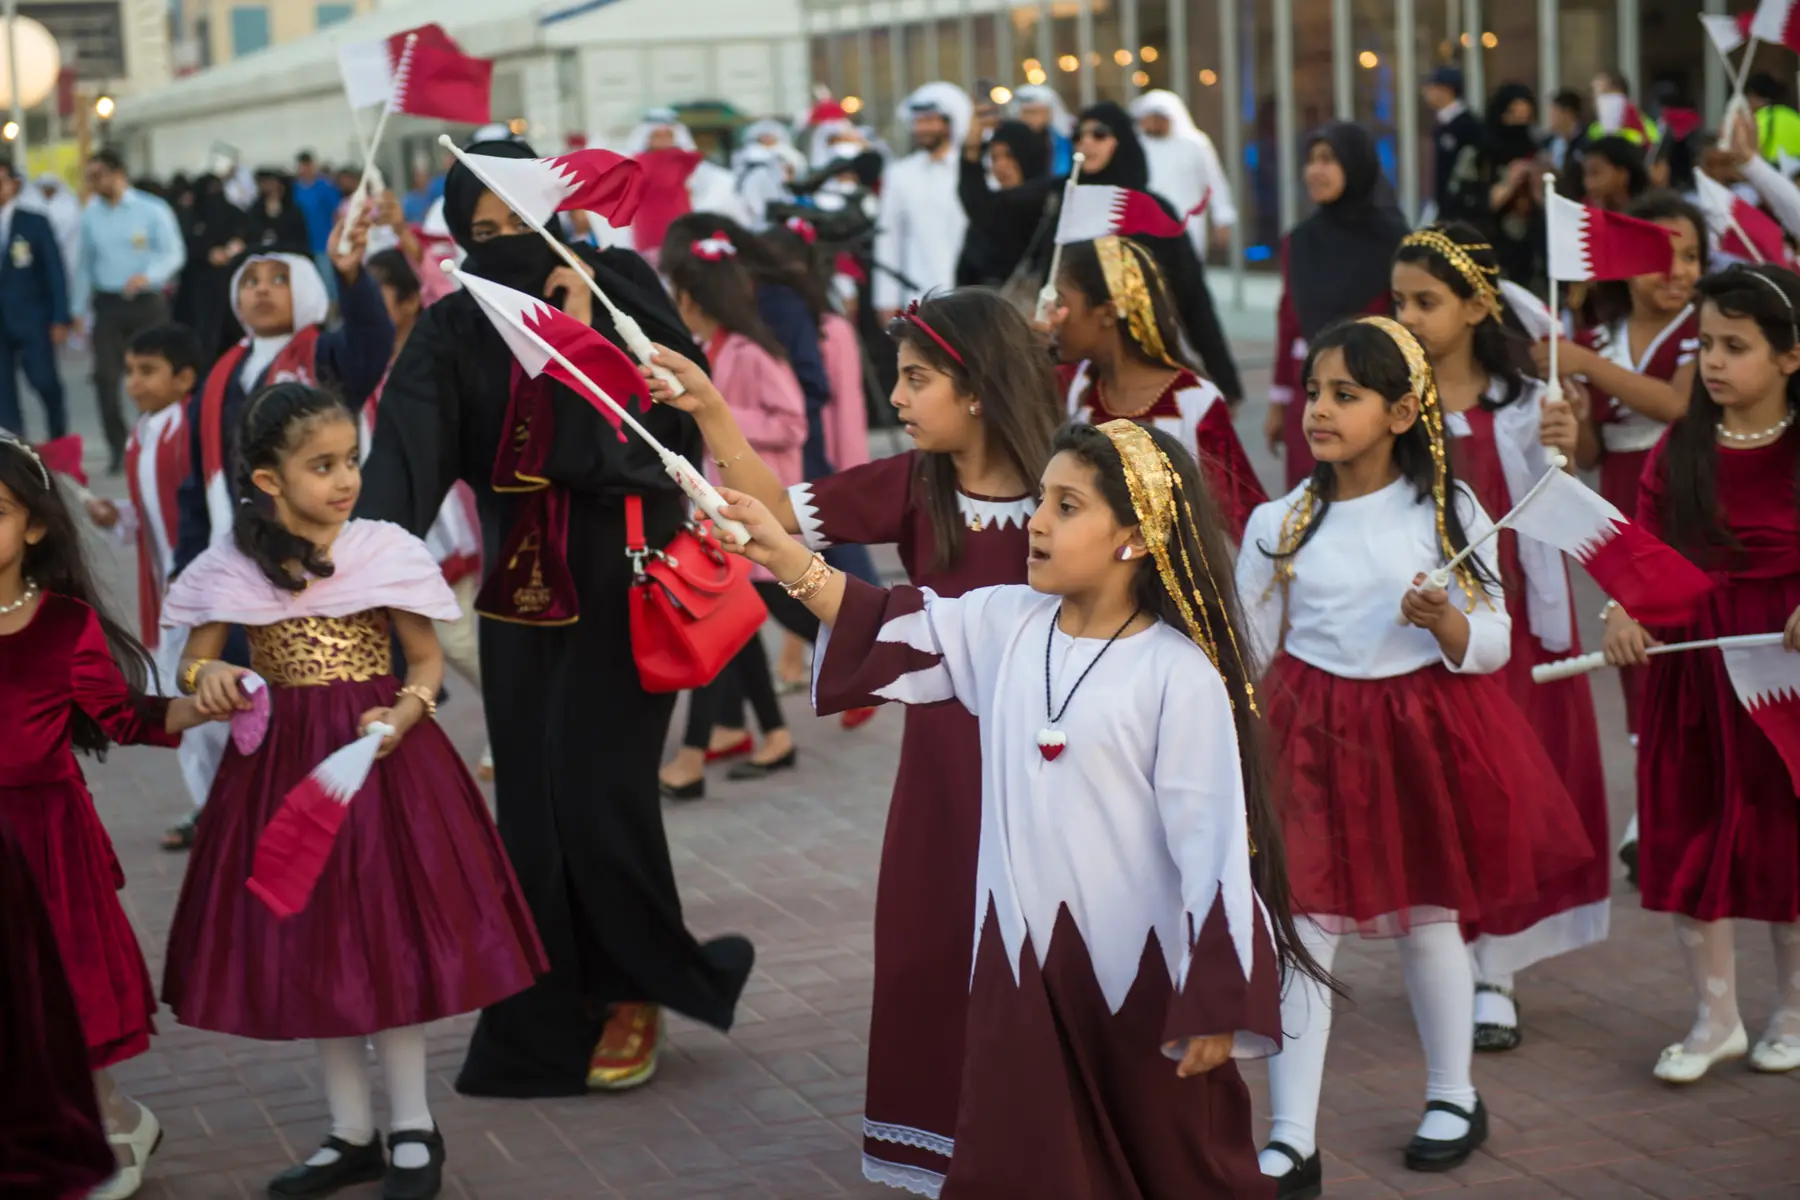 Primary school students celebrating Qatar National Day